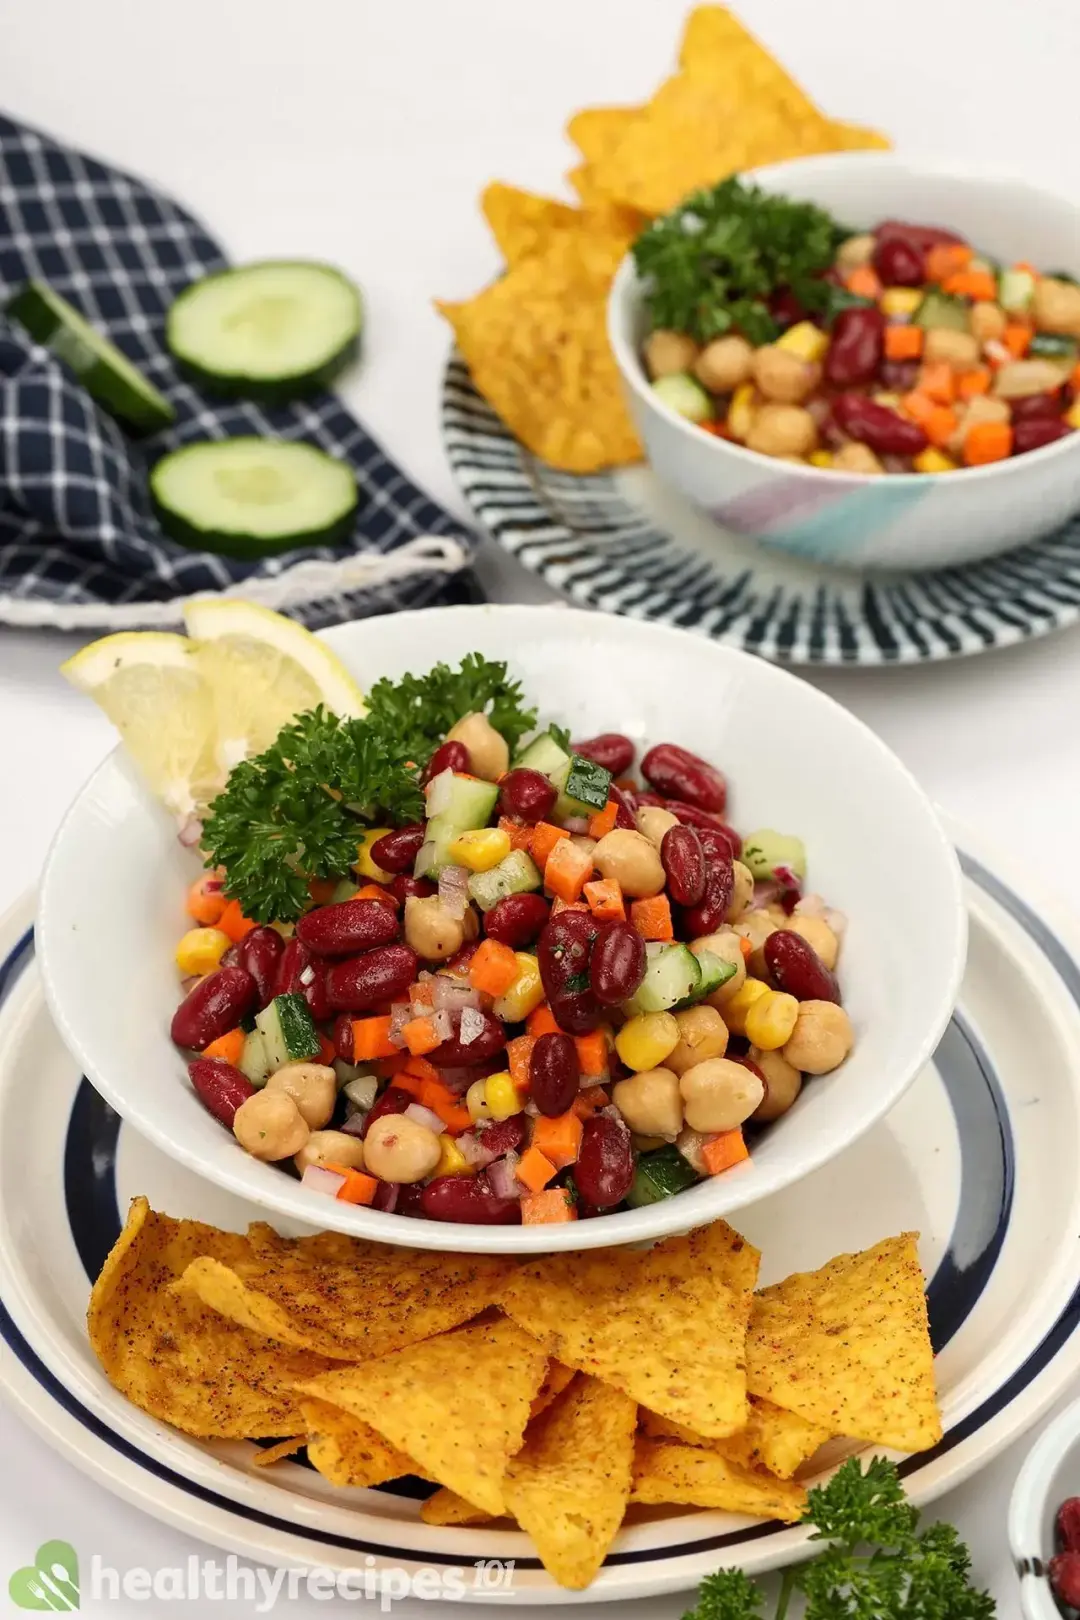 How to Prepare Ingredients for Kidney Bean Salad